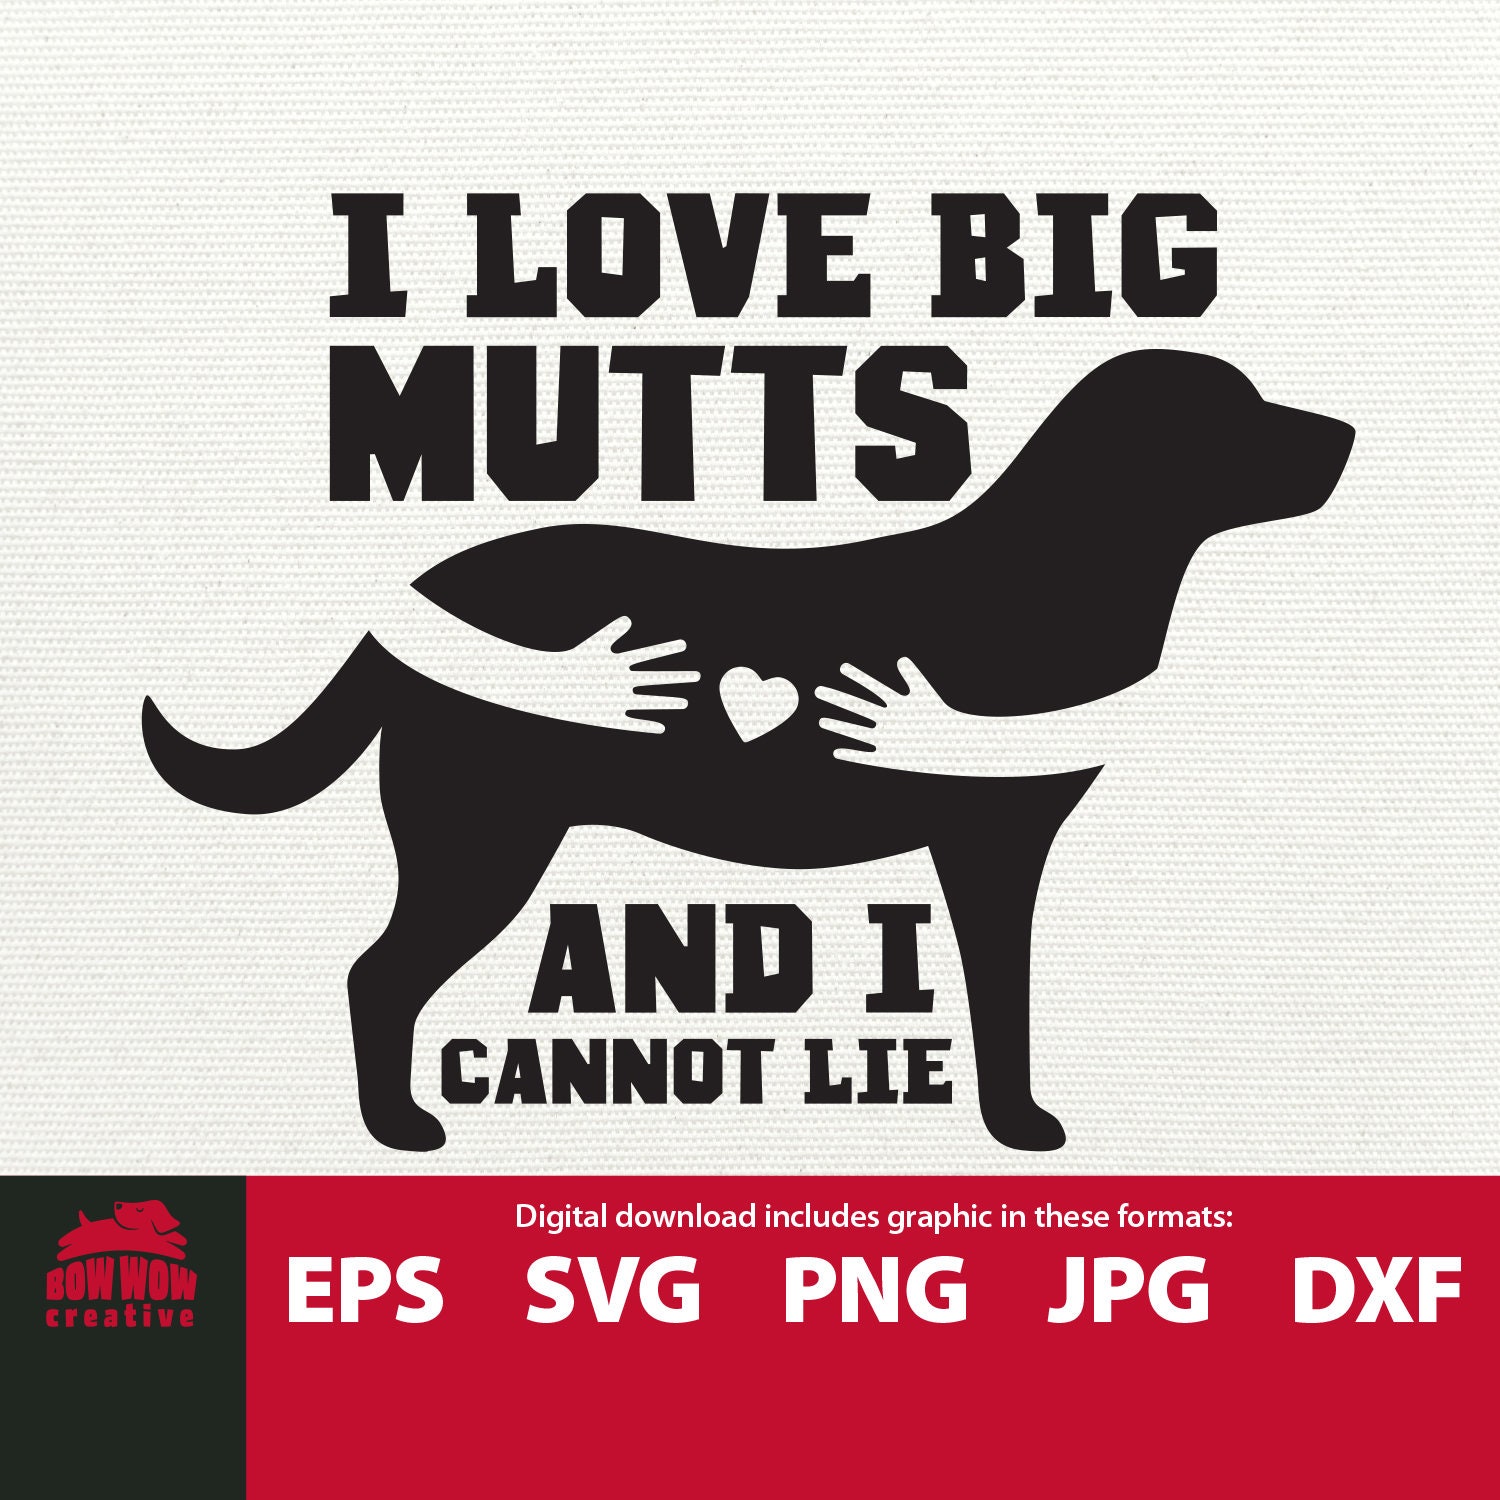 I Like Big Mutts Vinyl Sticker, Lustiger Hunde Sticker, Süßer Hund